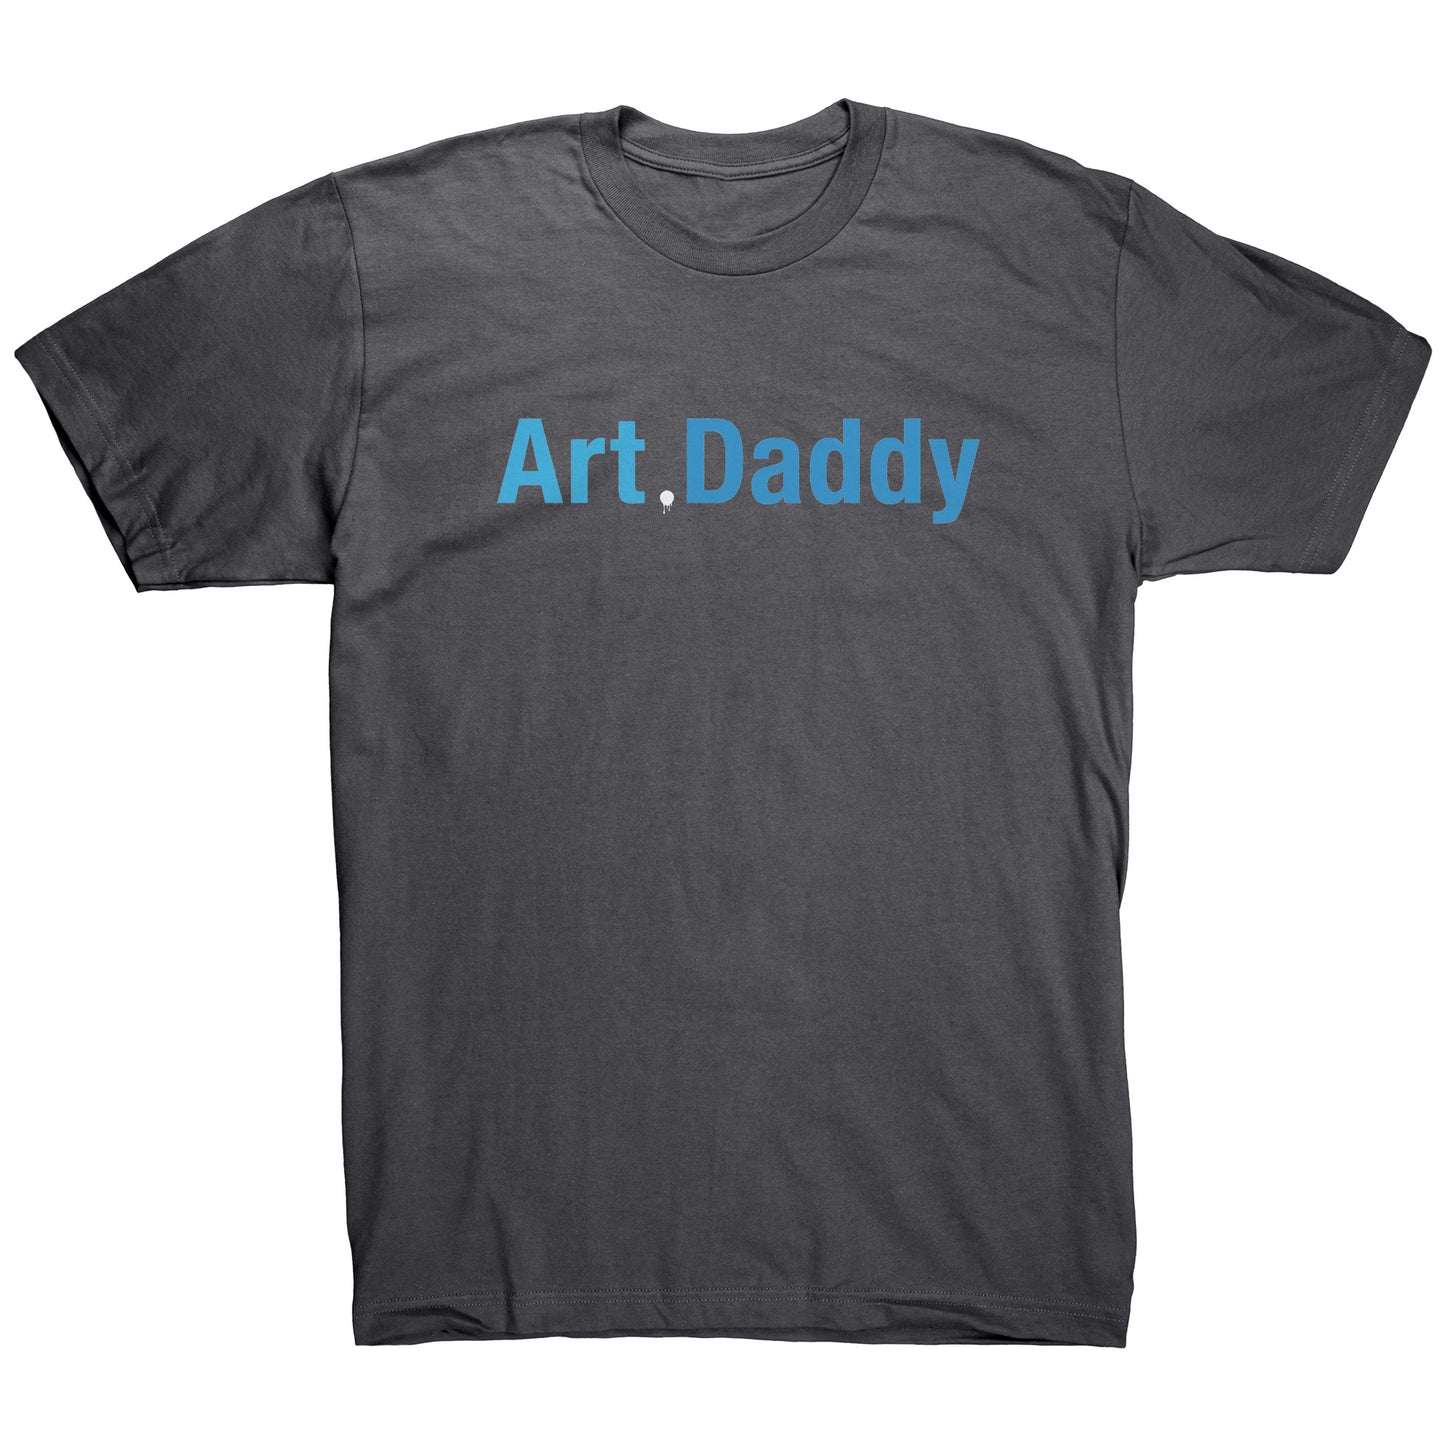 Art Daddy Tee